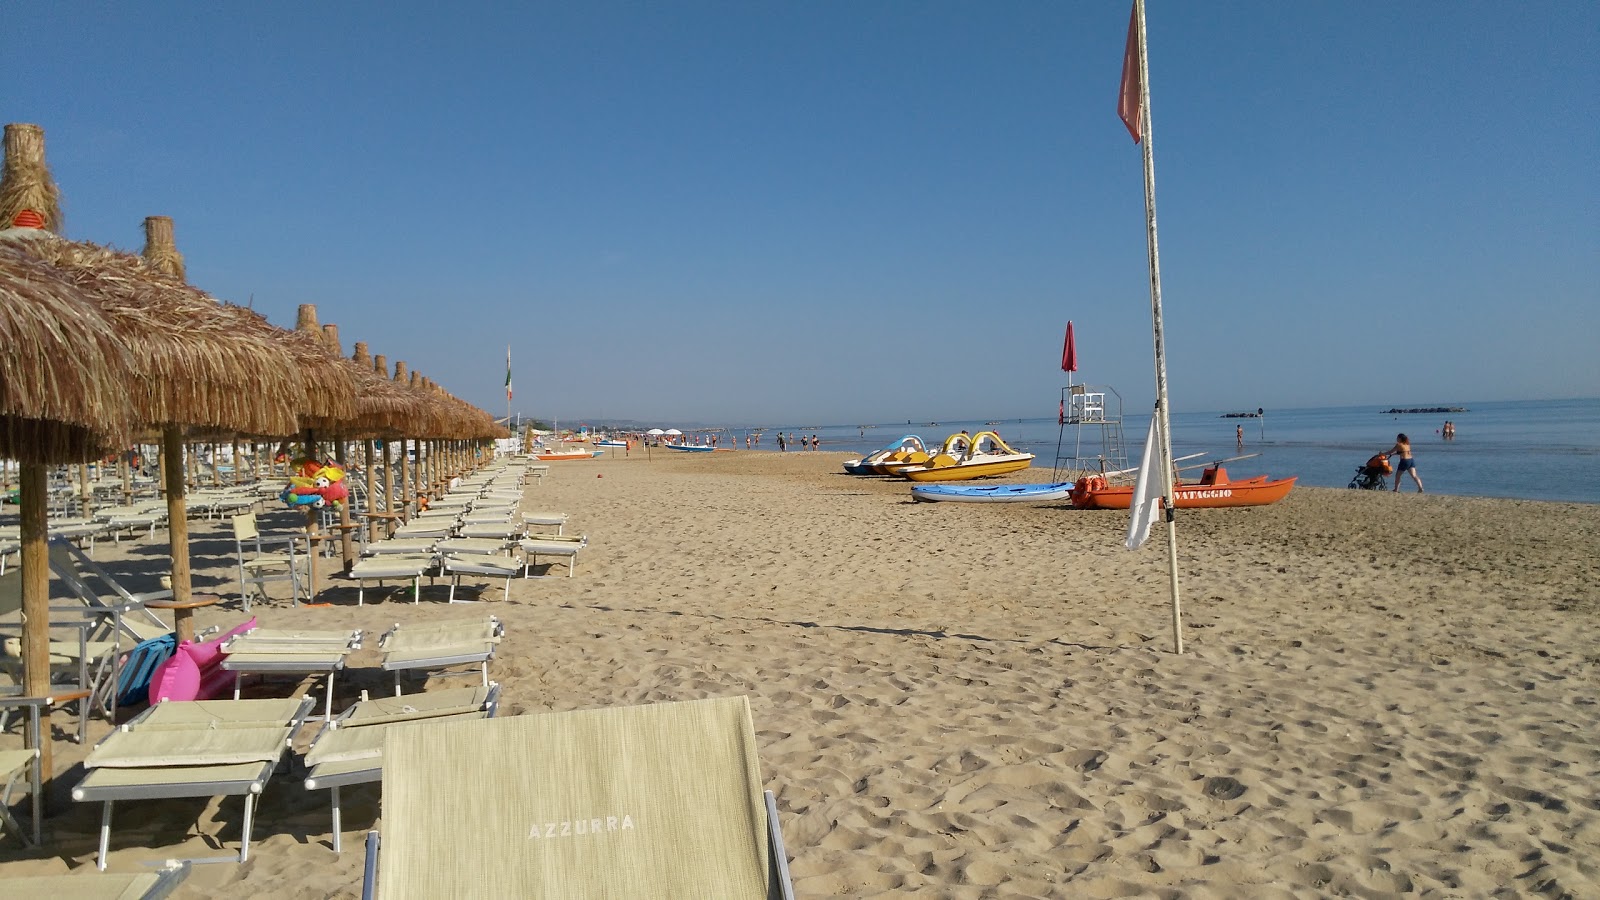 Foto de Spiaggia di Roseto Degli Abruzzi área de resort de praia